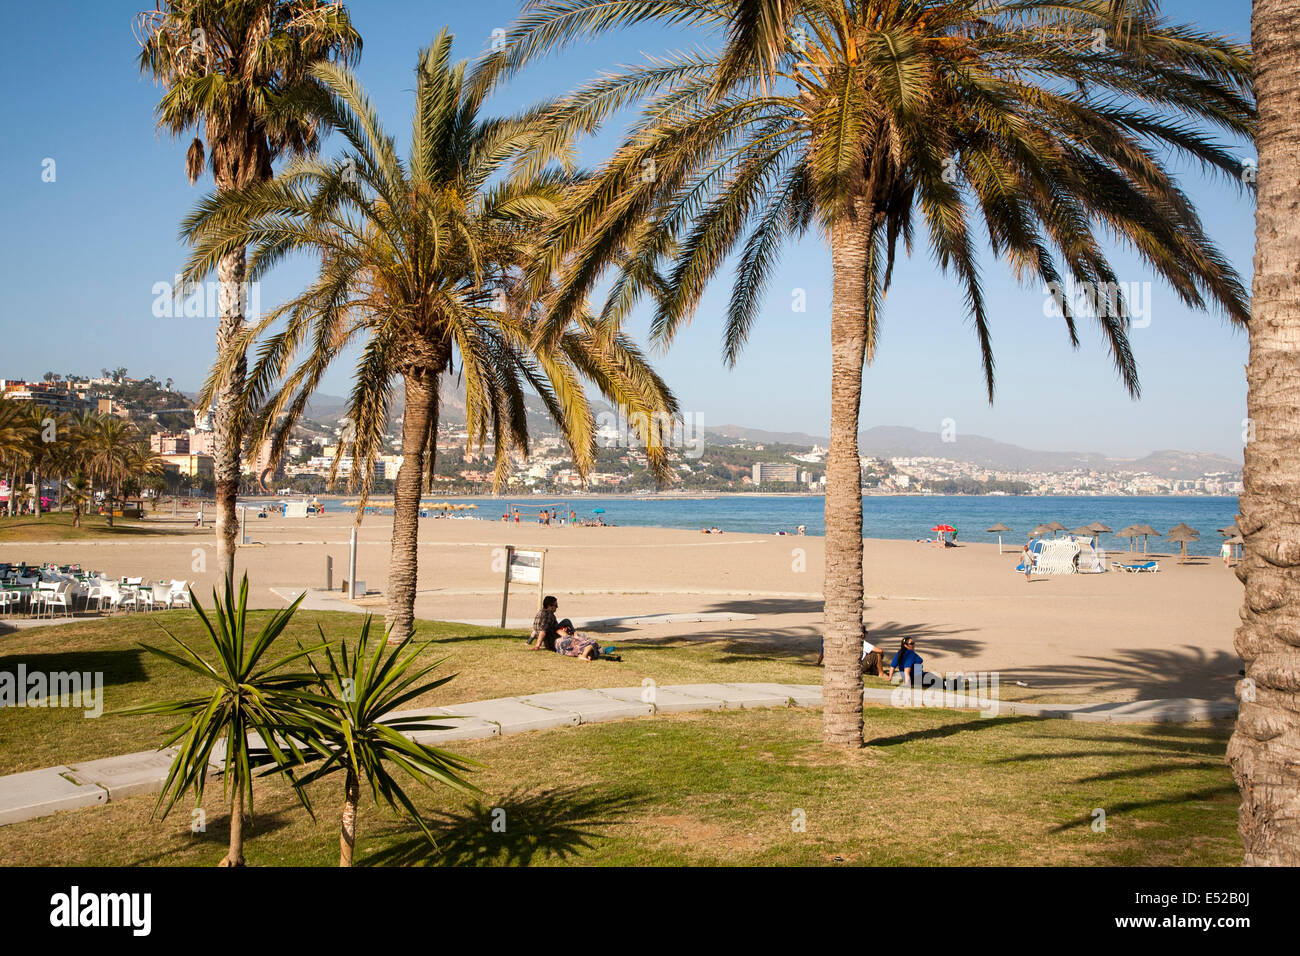 Palmen, Playa de Malaguera Sandstrand Menschen Sonnenbaden am Meer, Malaga, Spanien Stockfoto